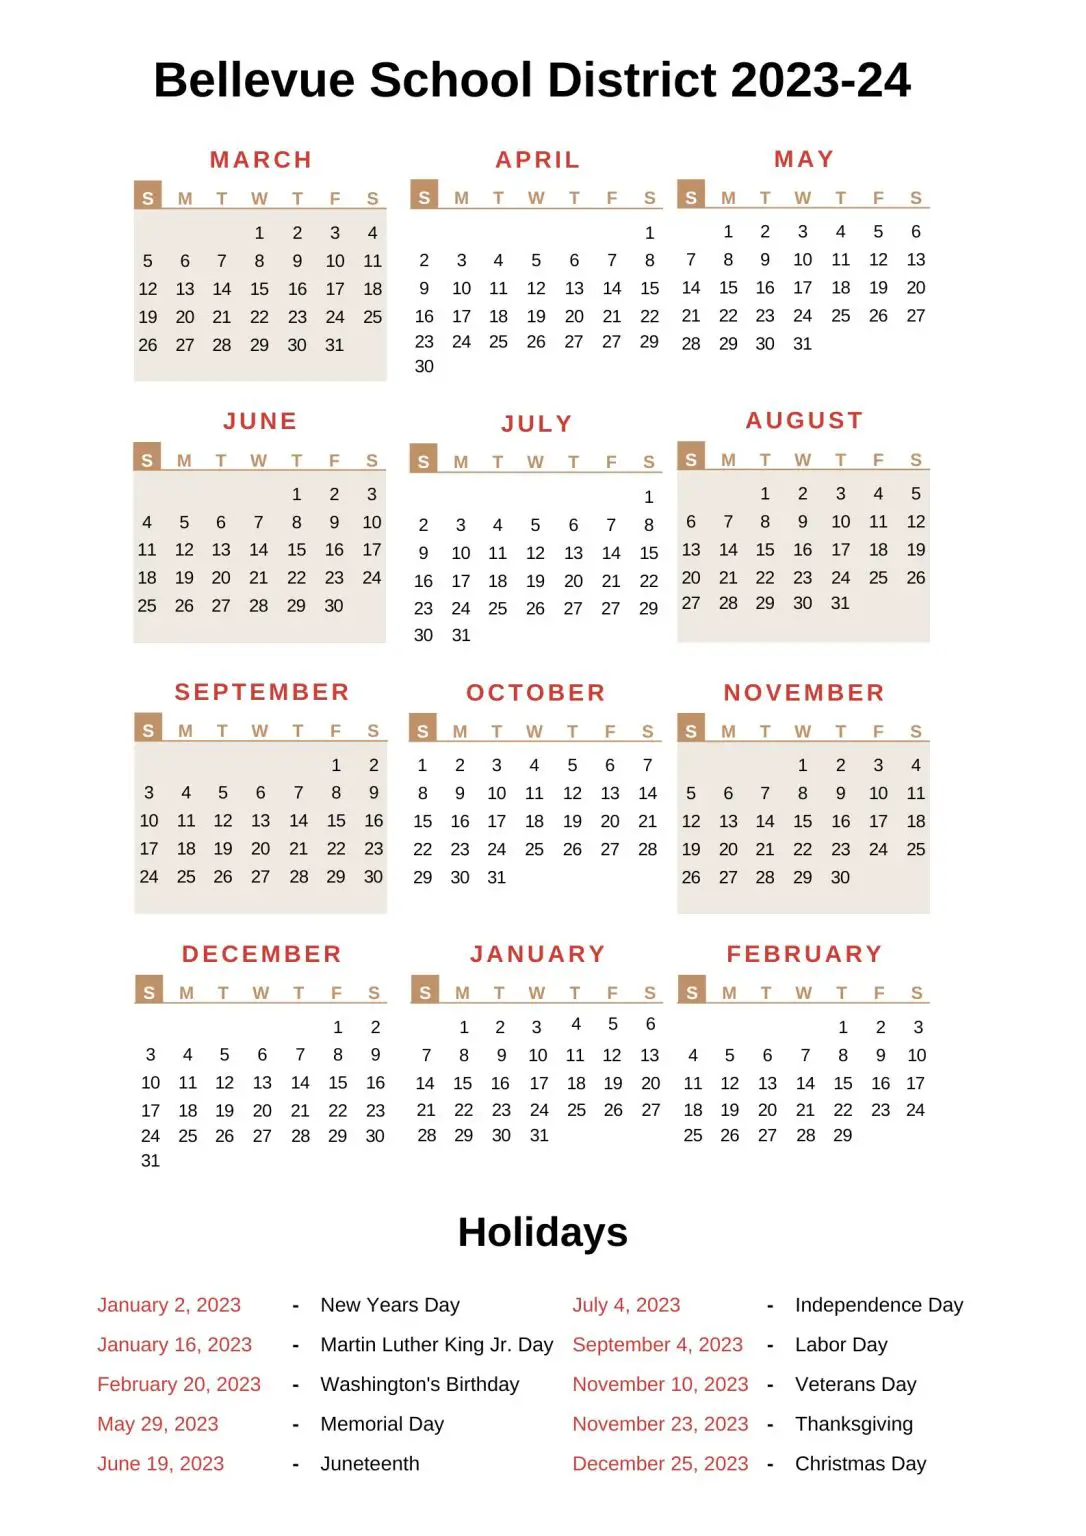 Bellevue School District Calendar 2023-24 with Holidays